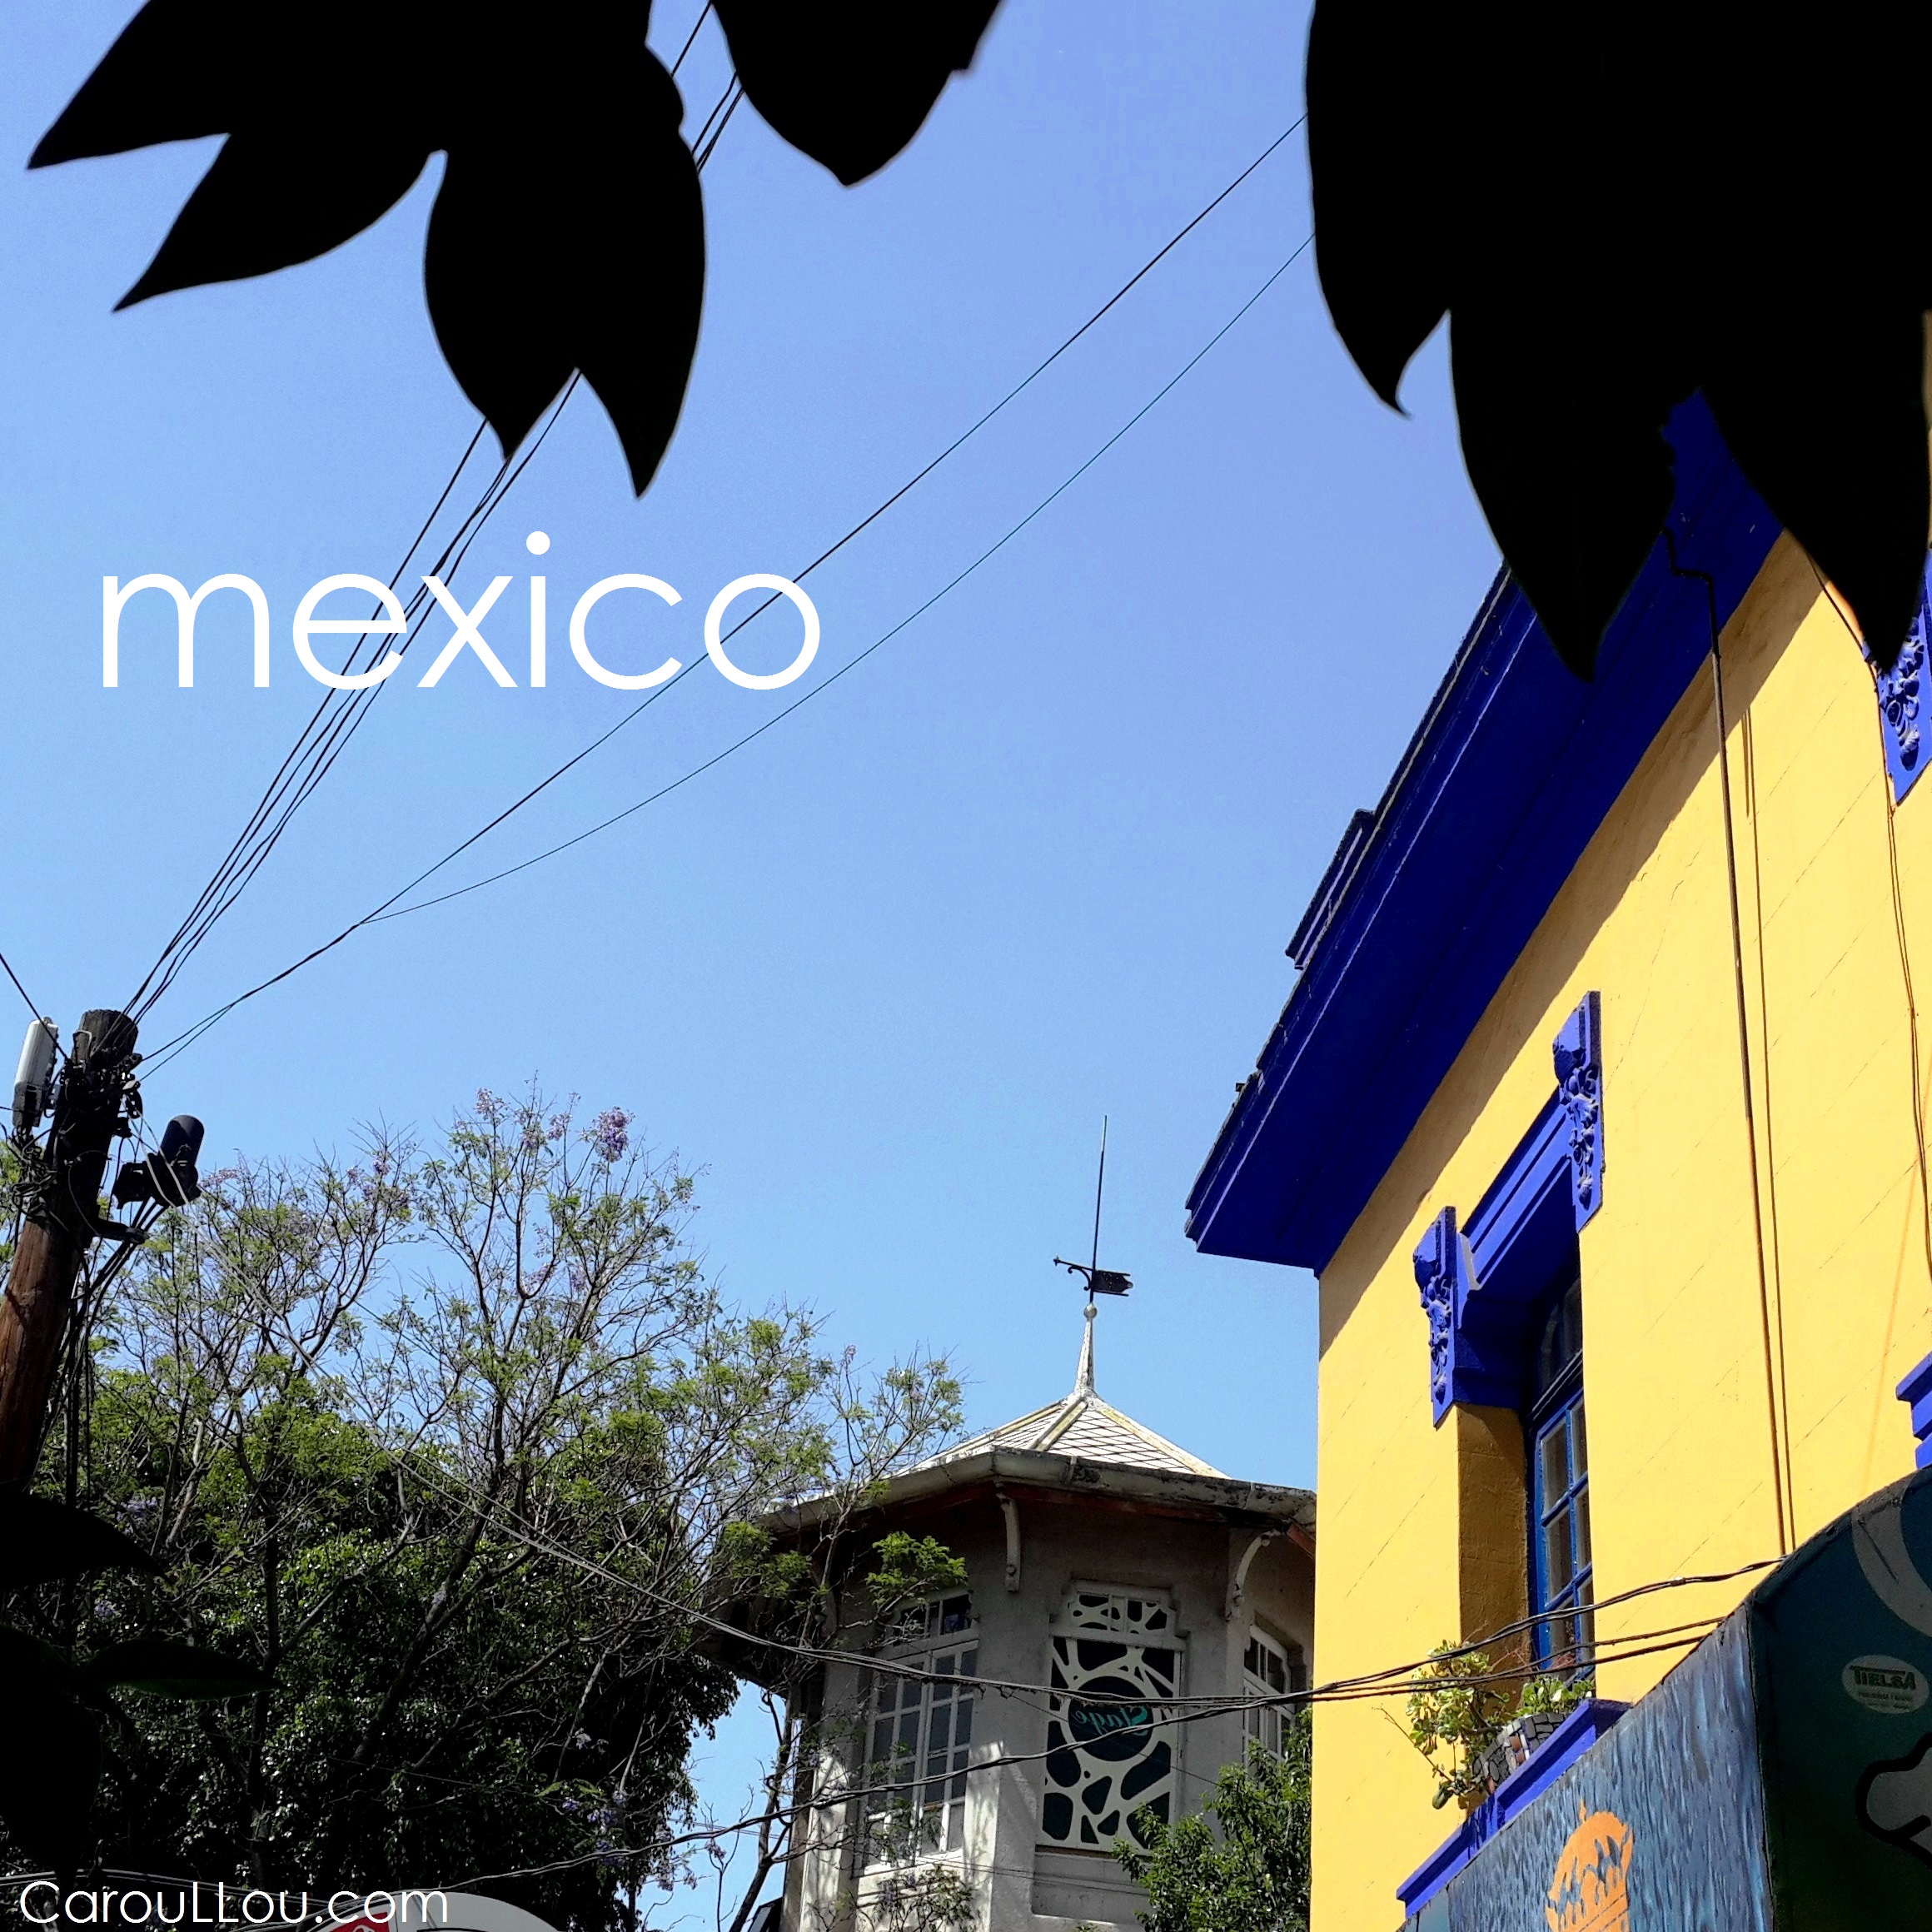 CarouLLou.com Carou LLou in Mexico city maison amigos +-